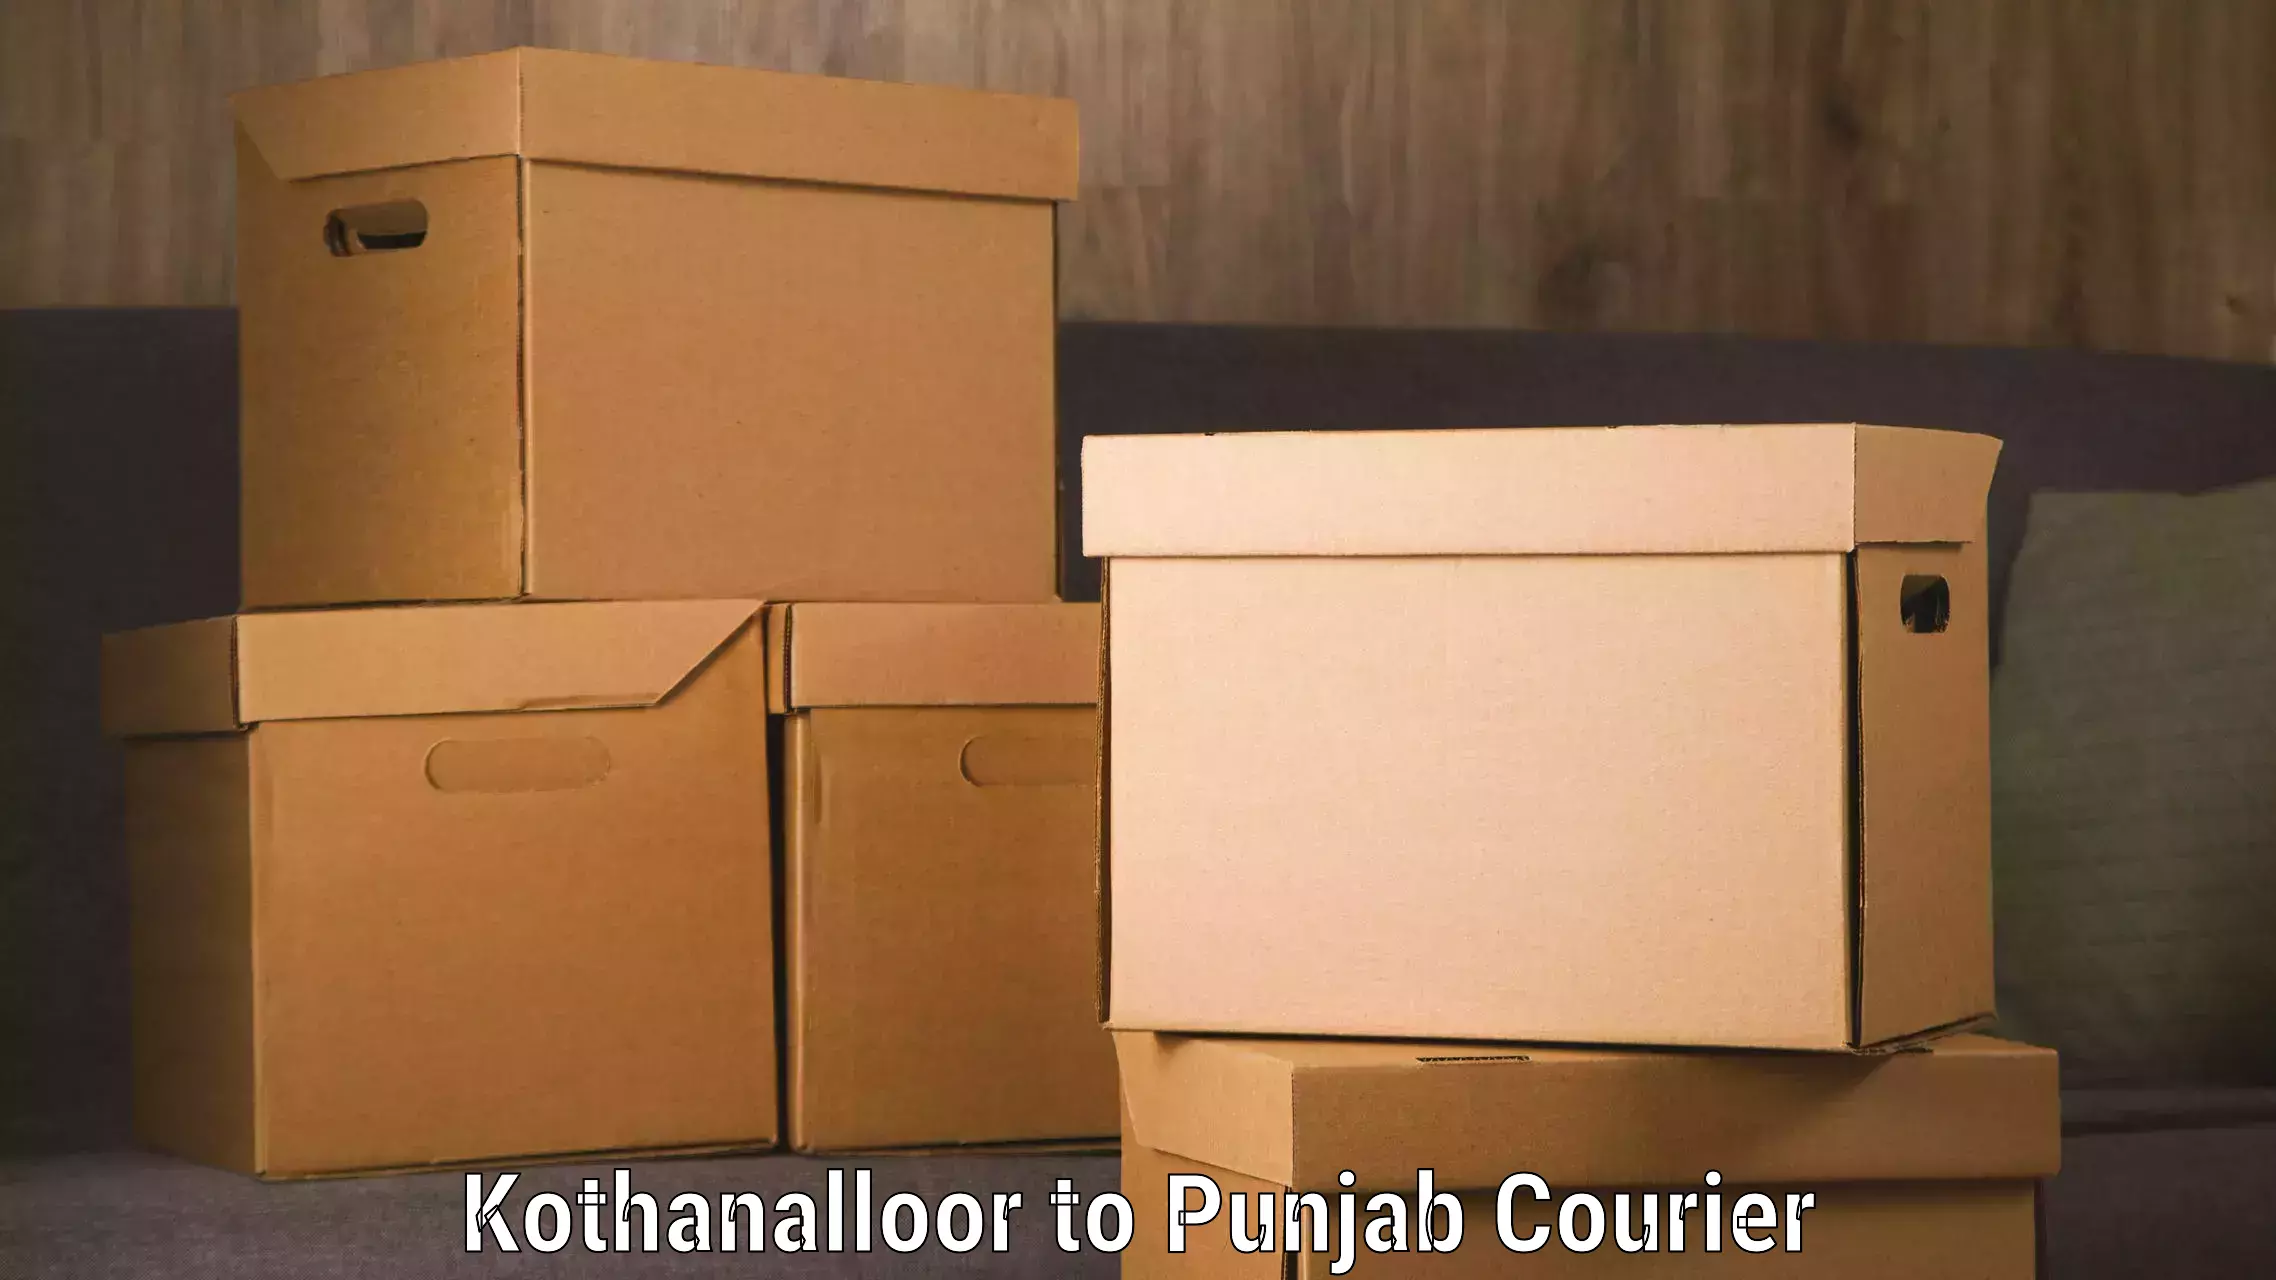 Full-service courier options Kothanalloor to Mohali